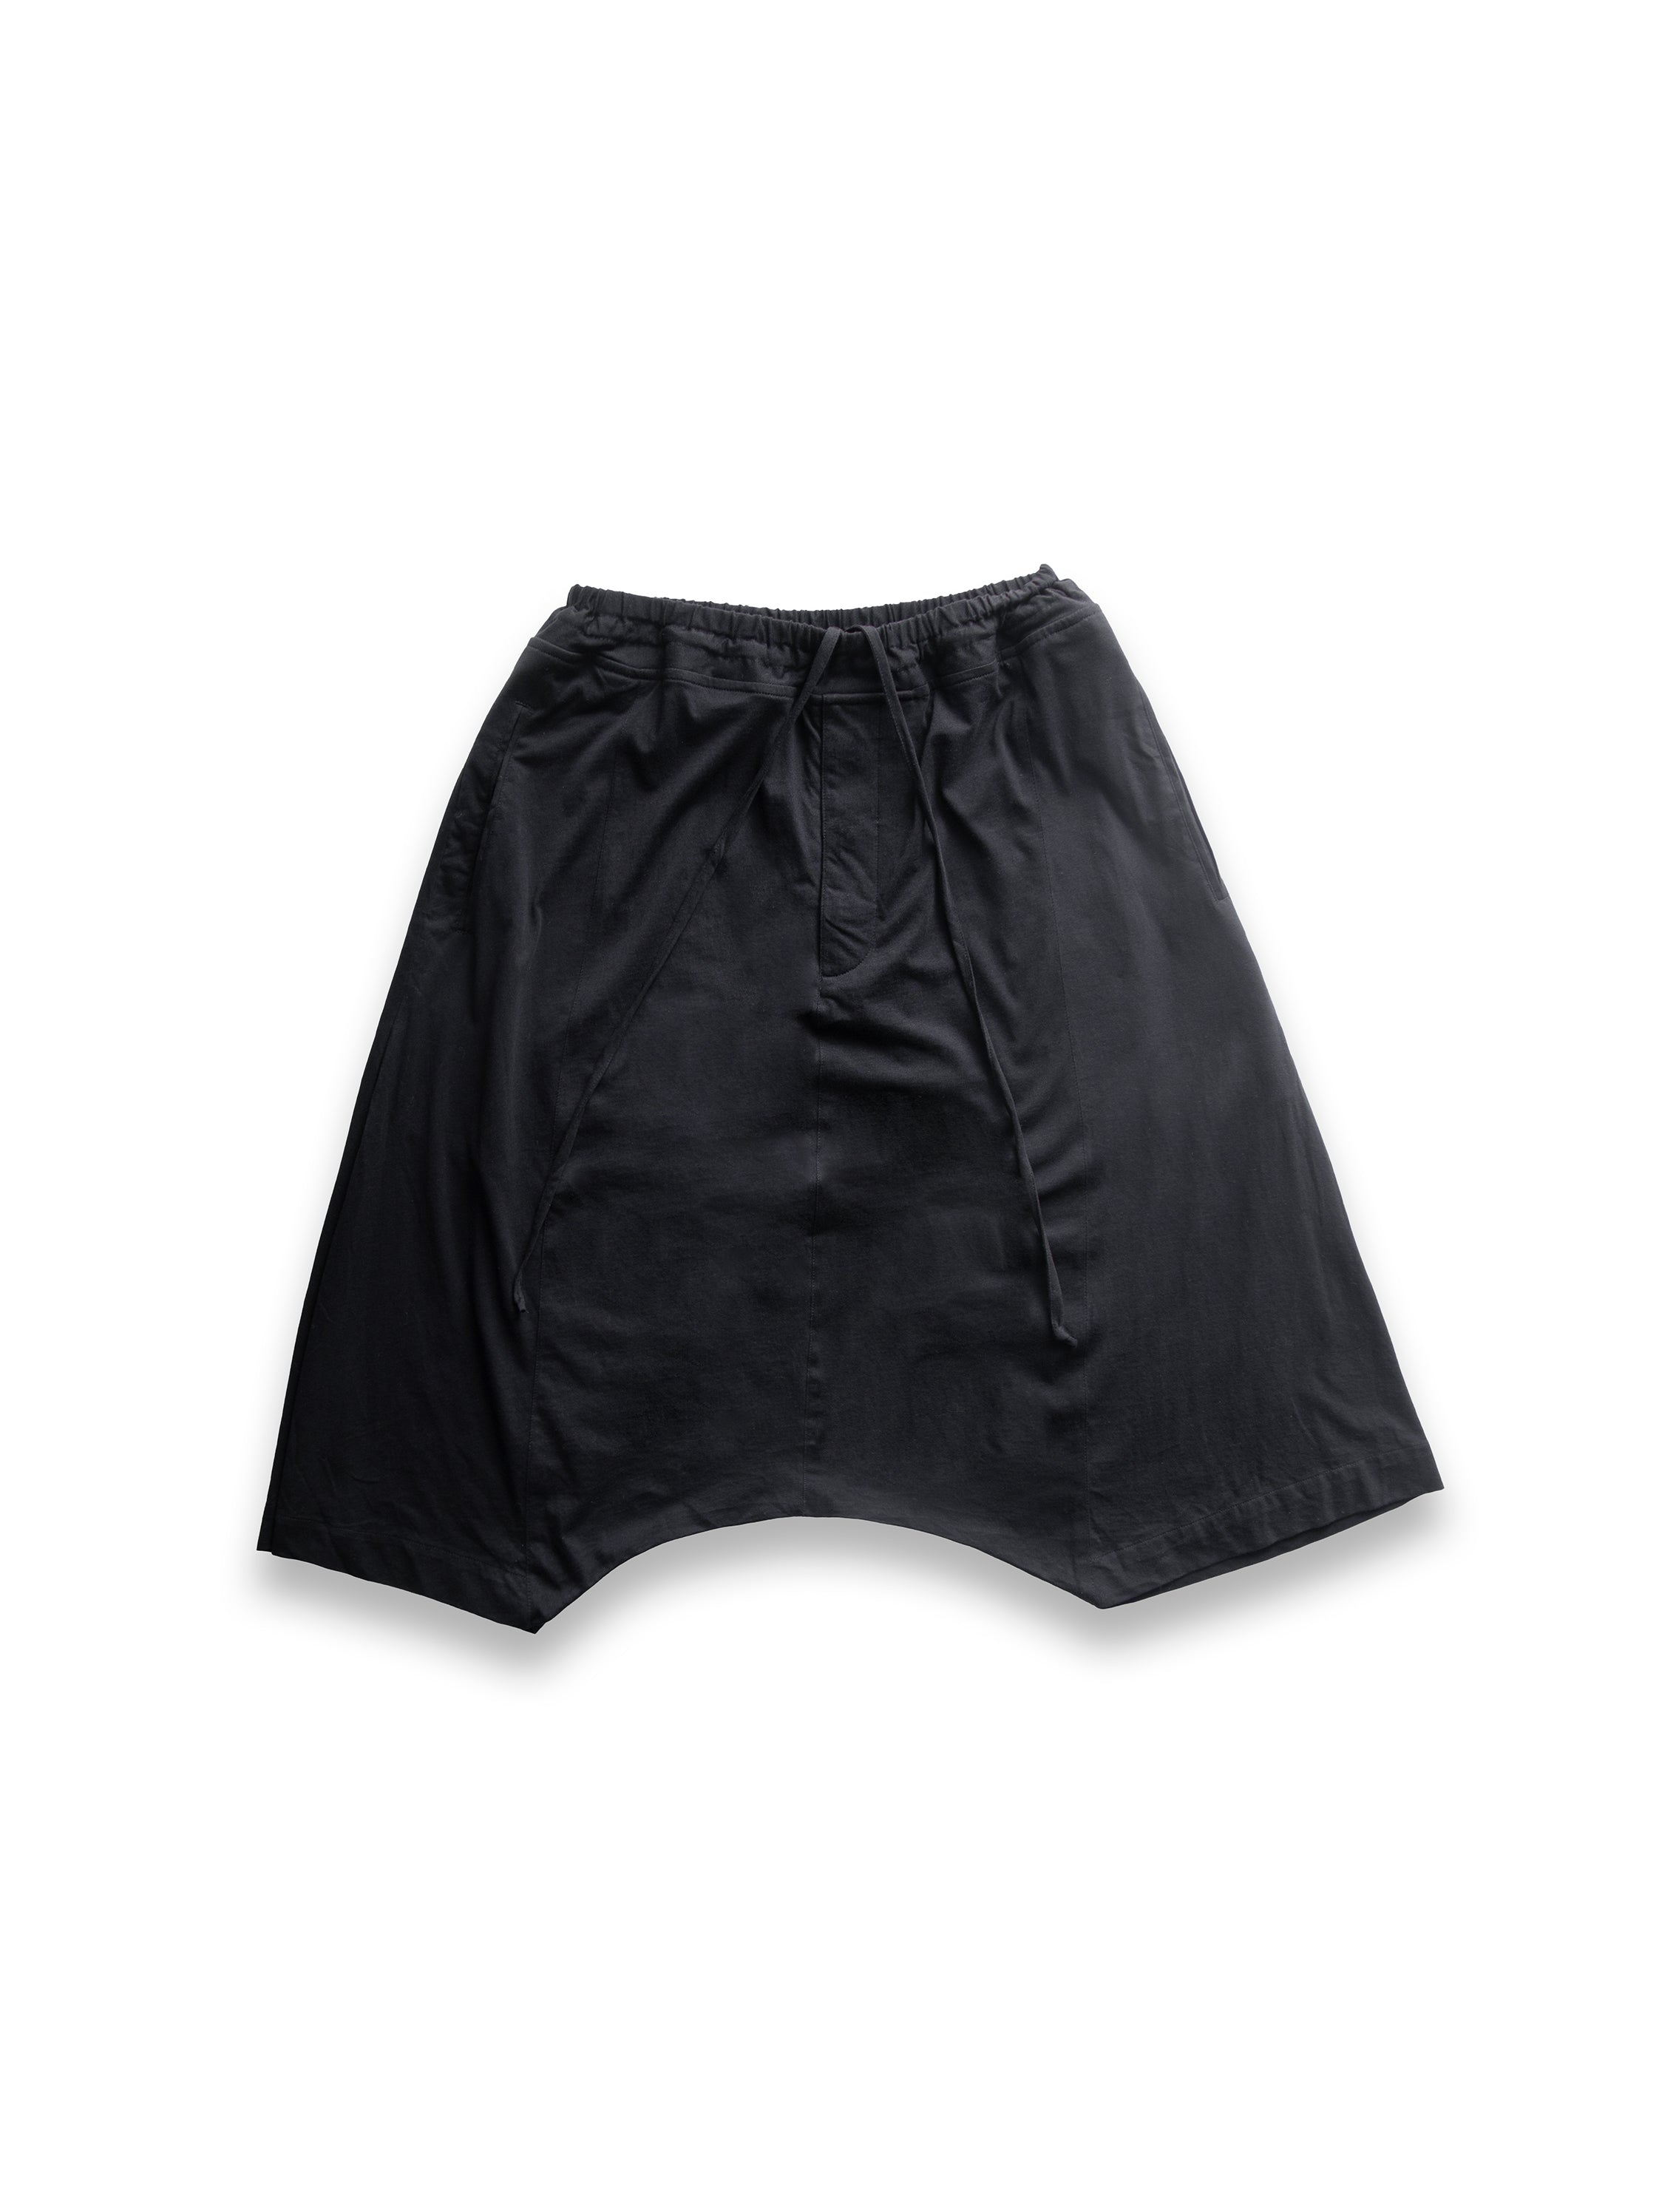 Black Oversized Drop Crotch Cotton Shorts